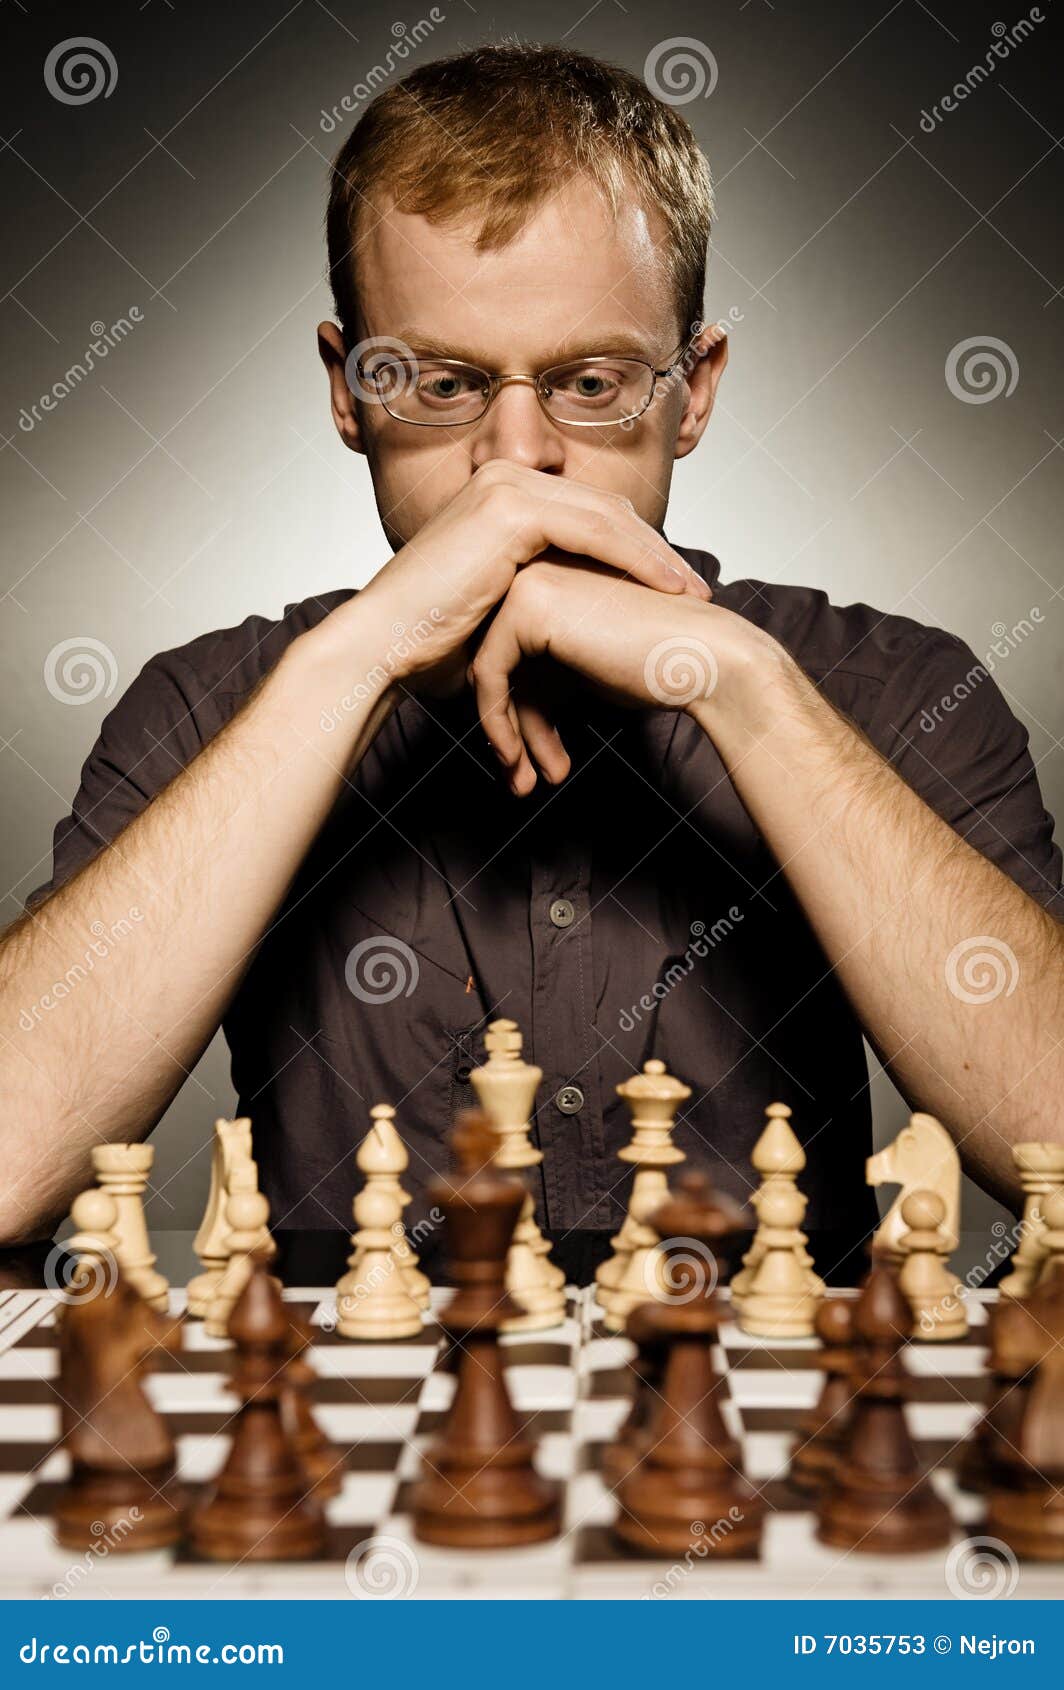 6+ Free Chess Master & Chess Images - Pixabay